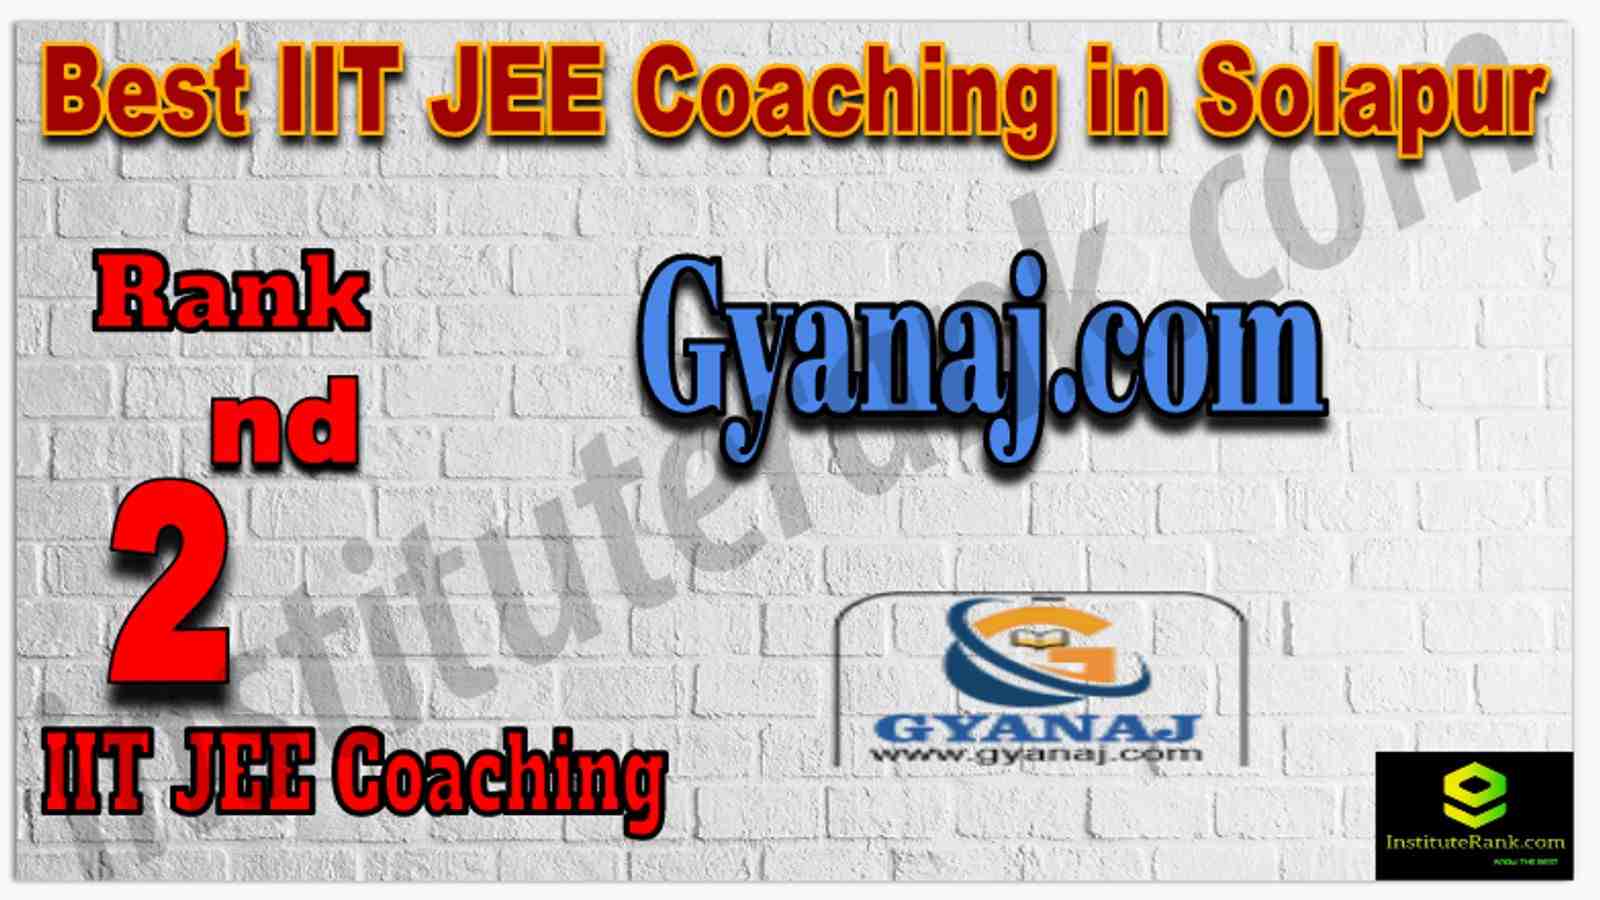 Rank 2nd Best IIT JEE Coaching in Solapur